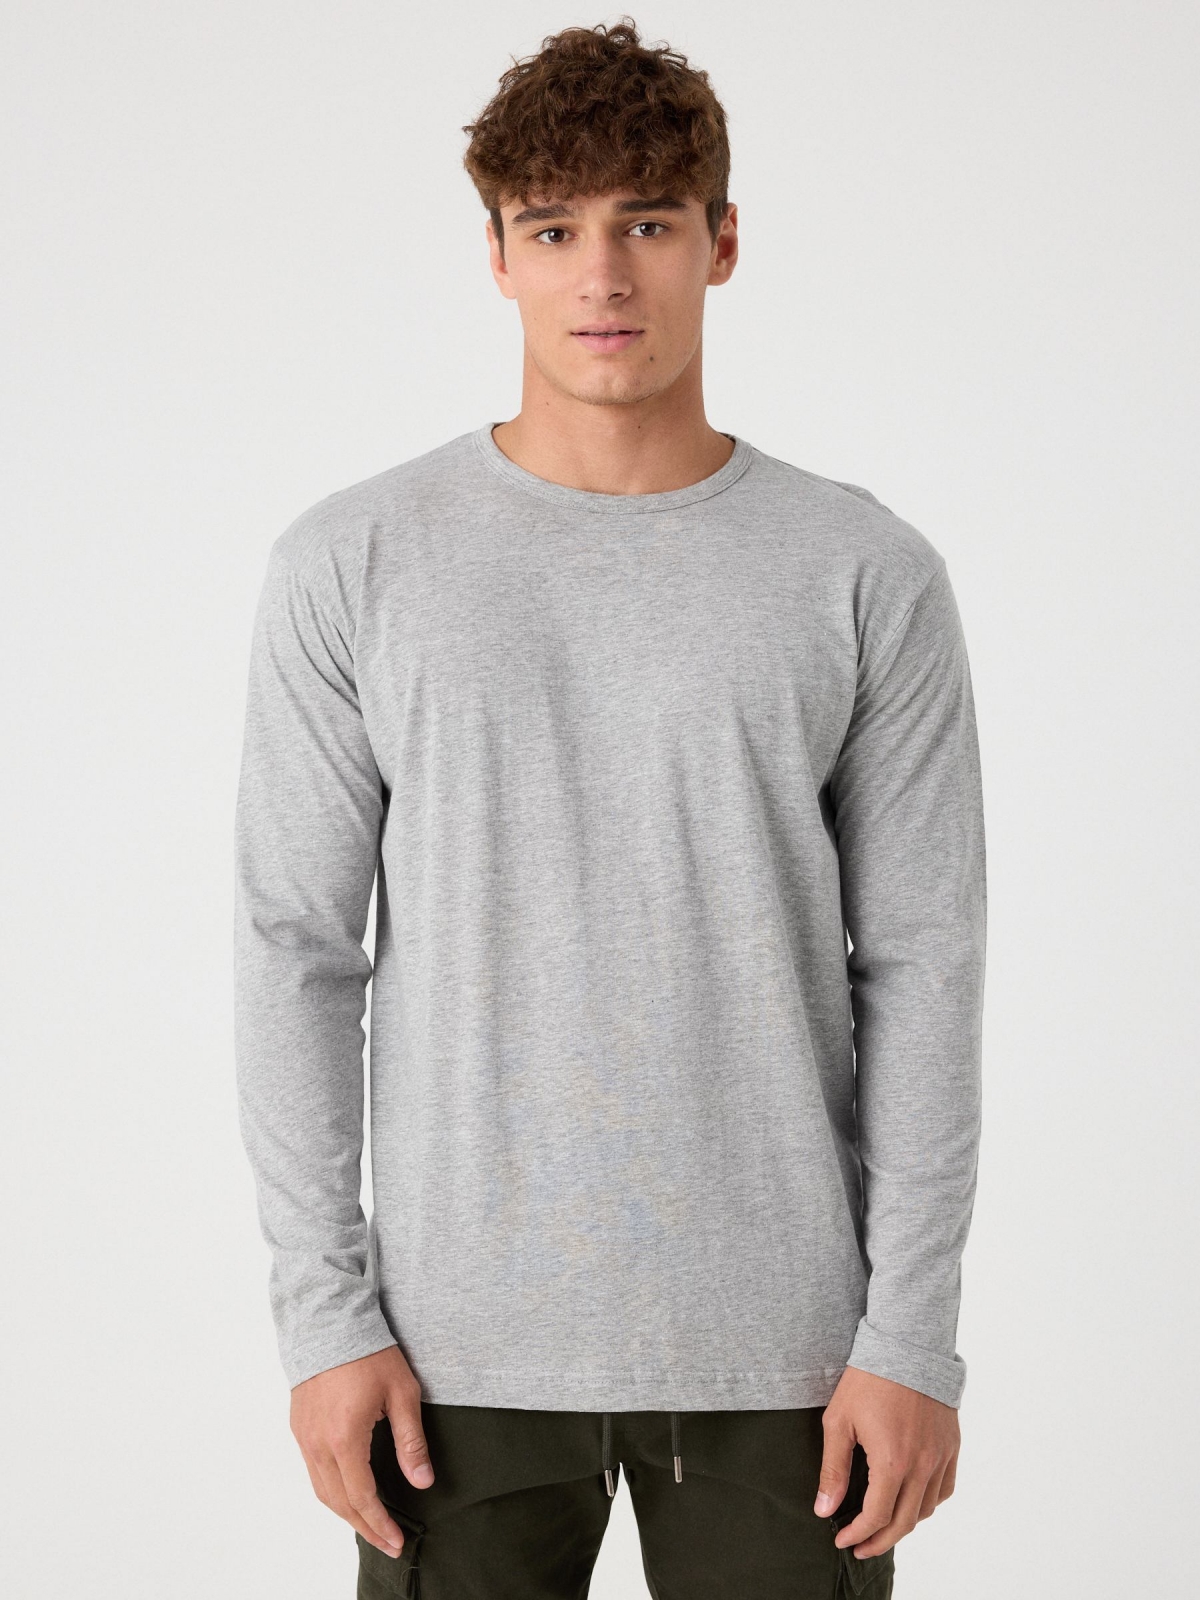 Camiseta básica manga larga gris melange vista media frontal